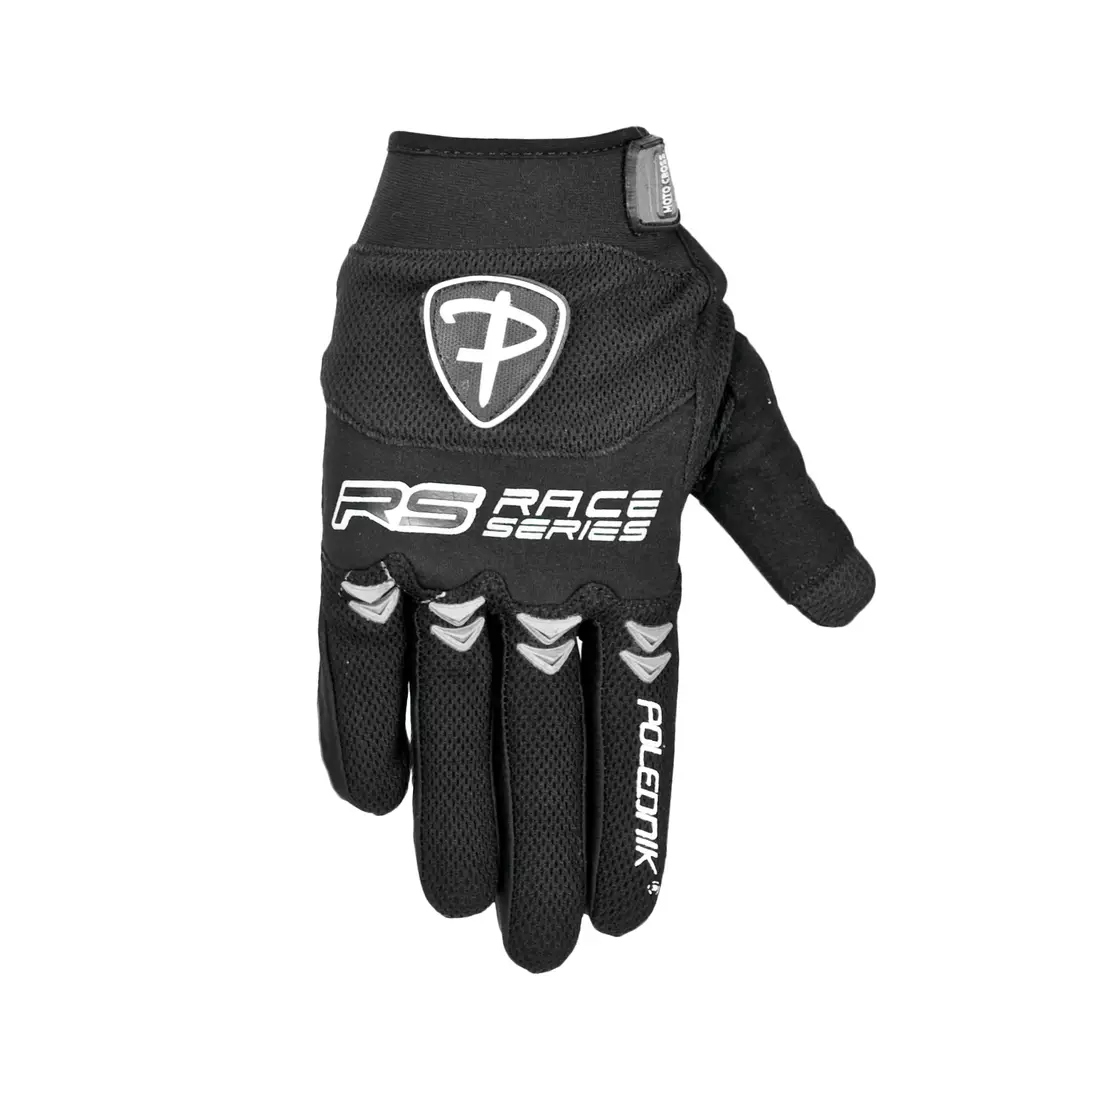 POLEDNIK MX gloves, color: black